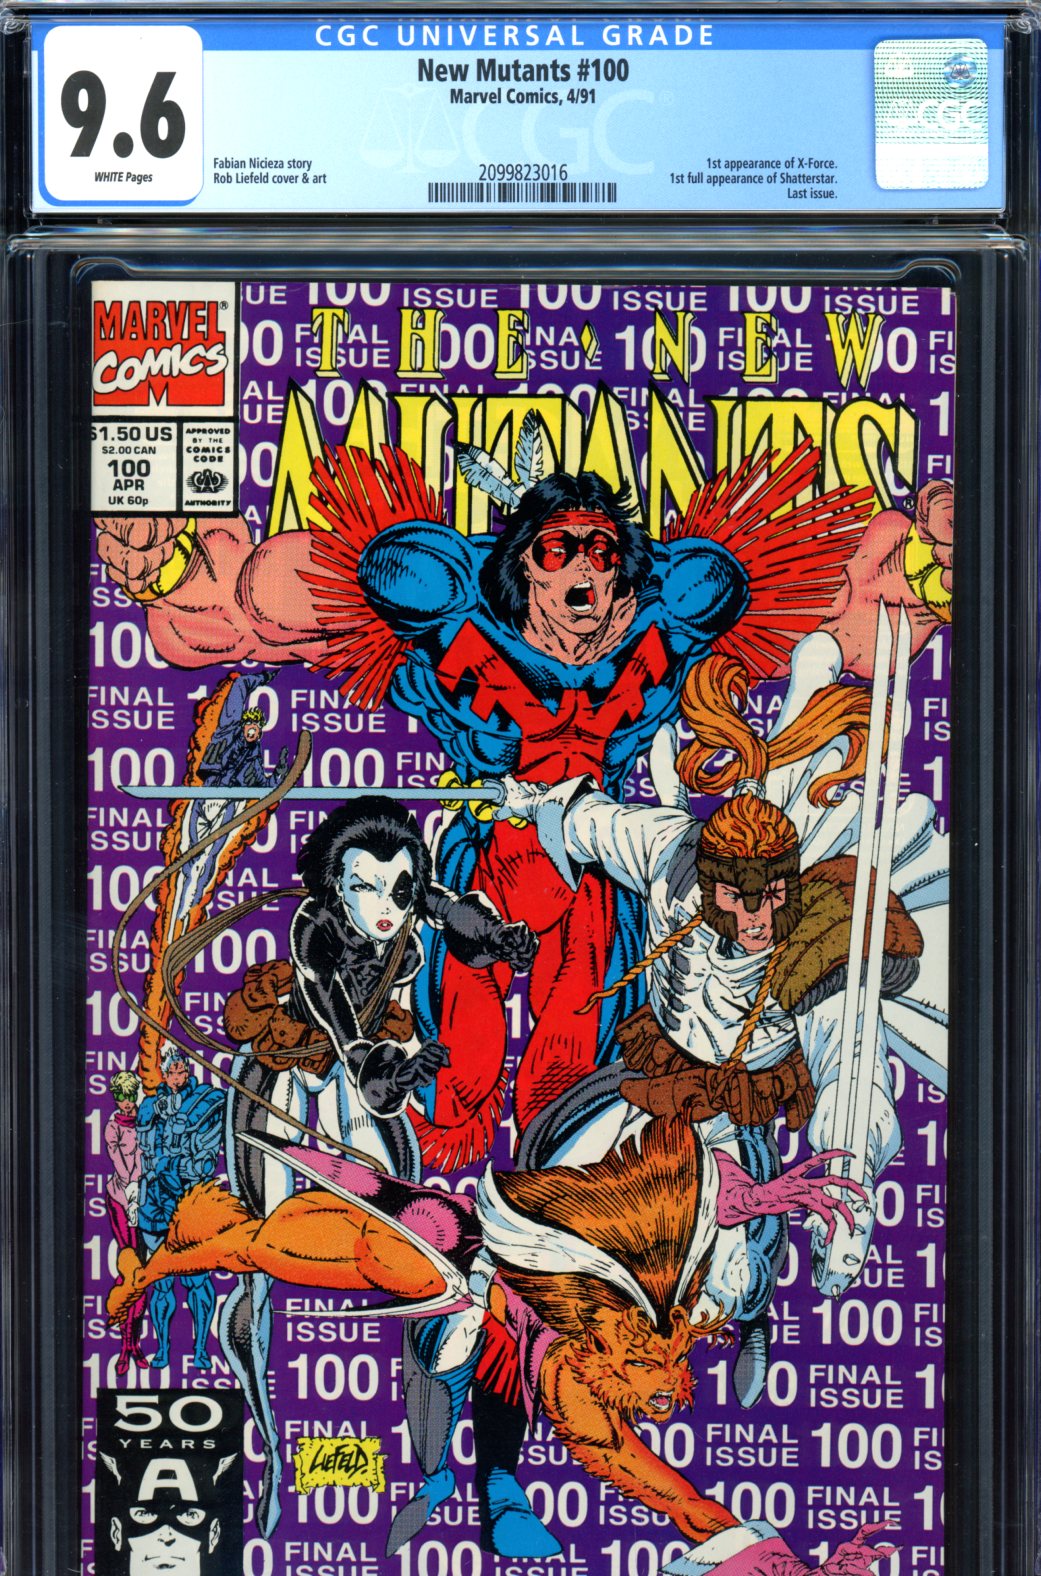 New Mutants #100 CGC 9.6 w